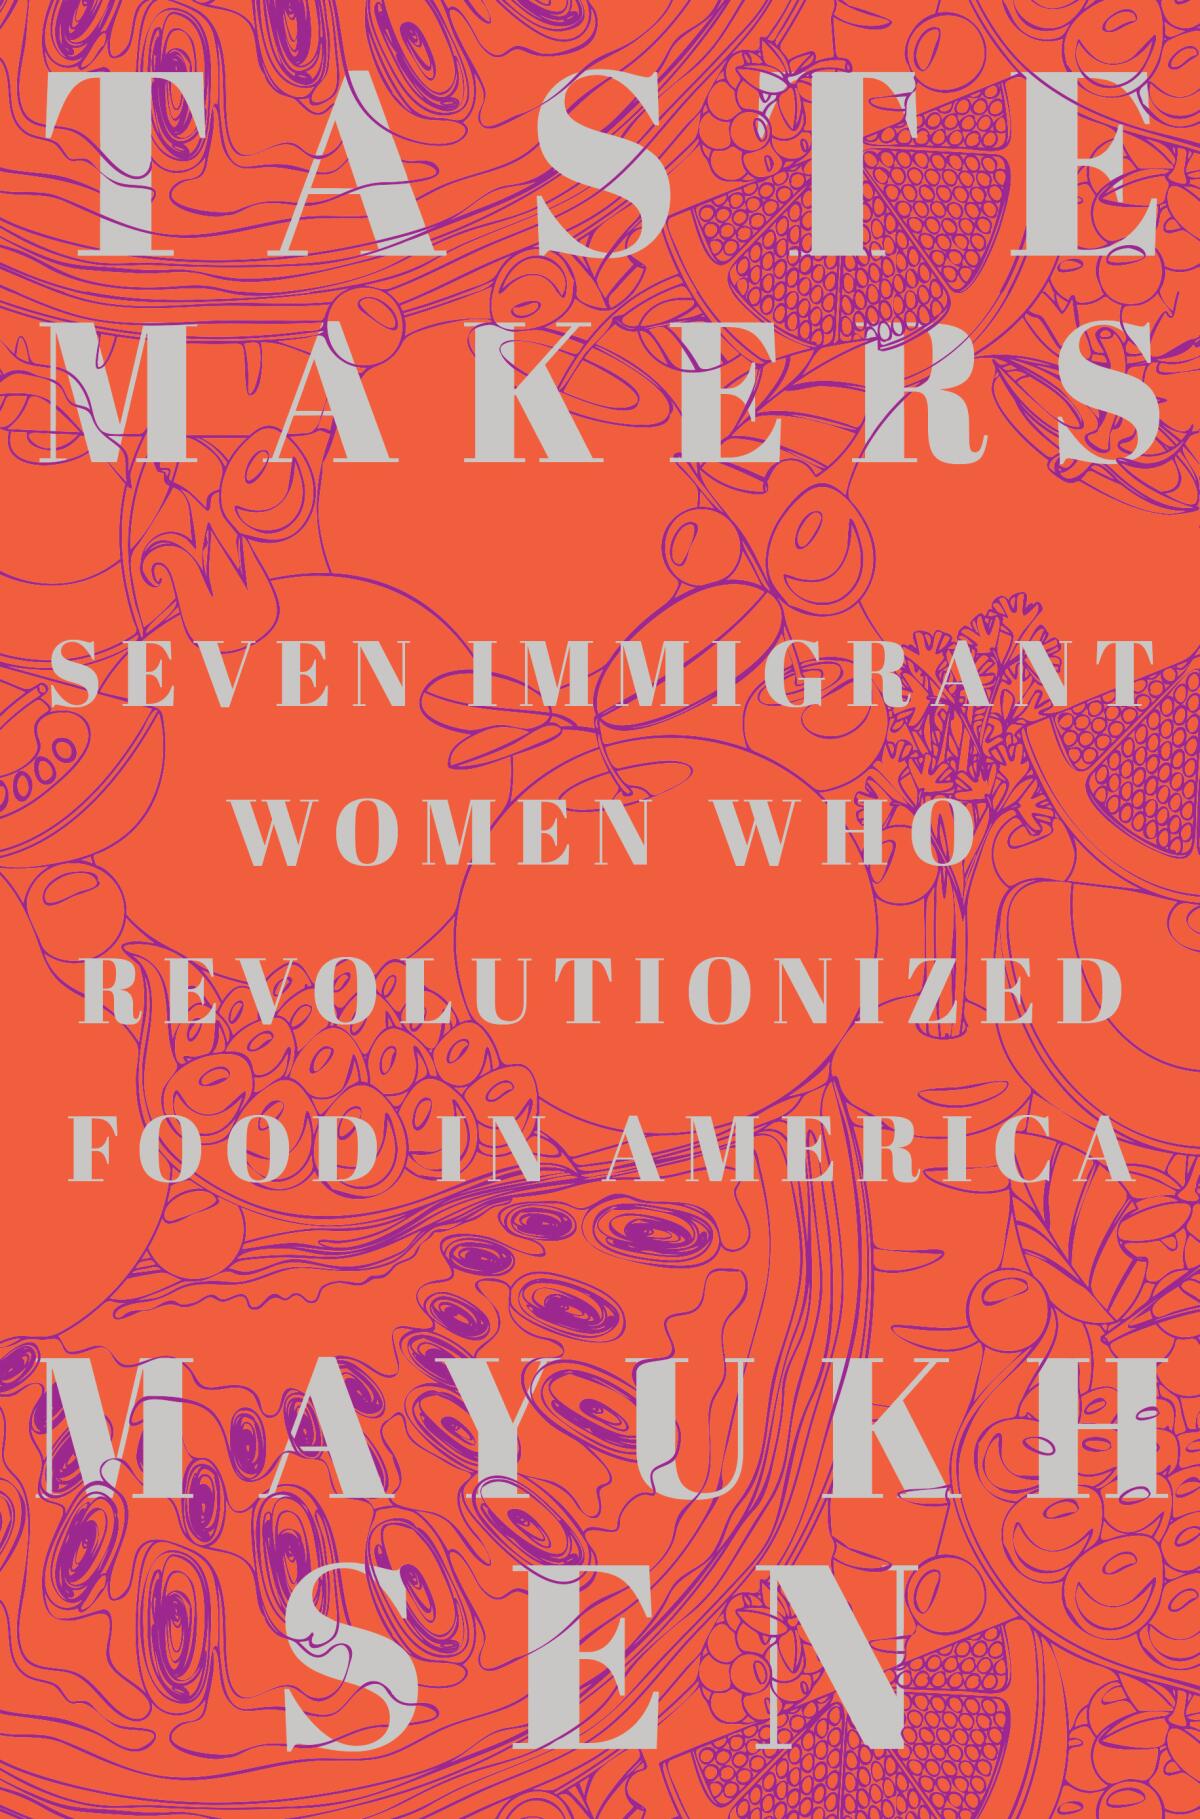 "Taste Makers" by Mayukh Sen